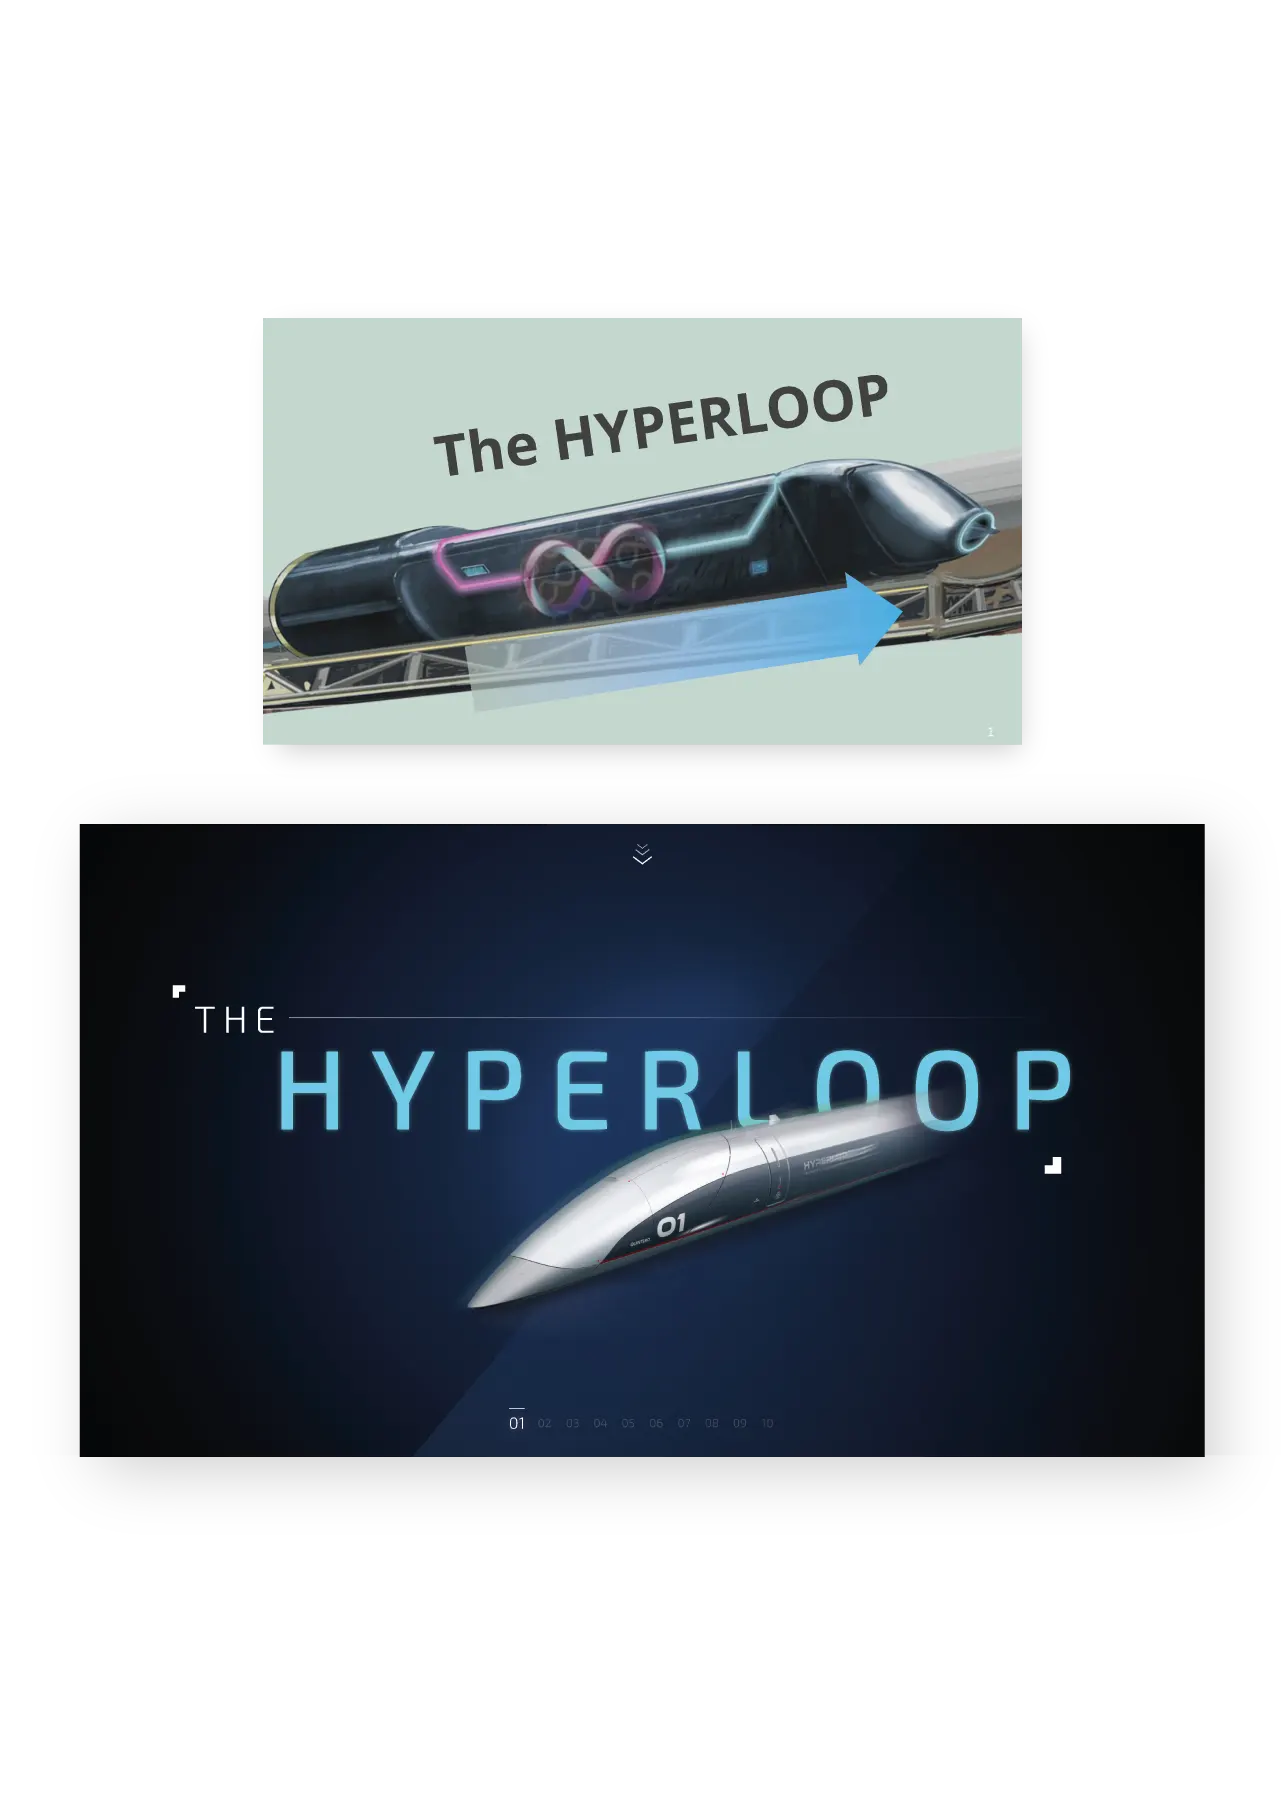 Avant-après-mobile-HYPERLOOP-01